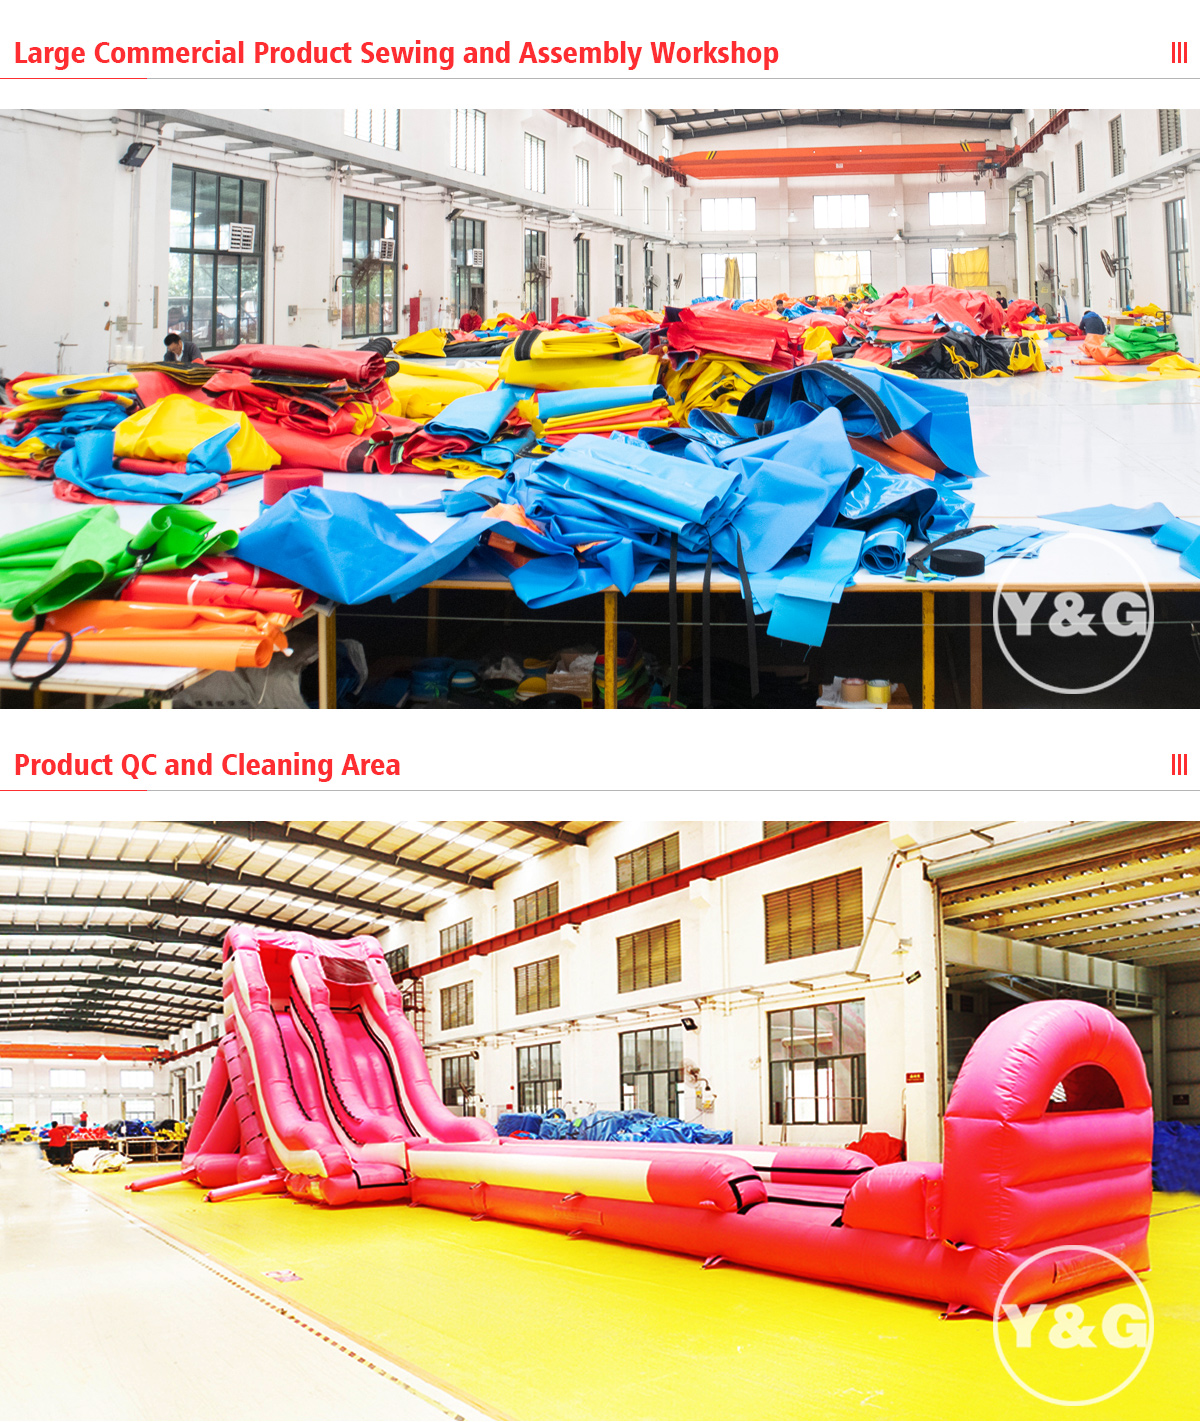 Ocean Theme Indoor Inflatable ParkYGIP-11